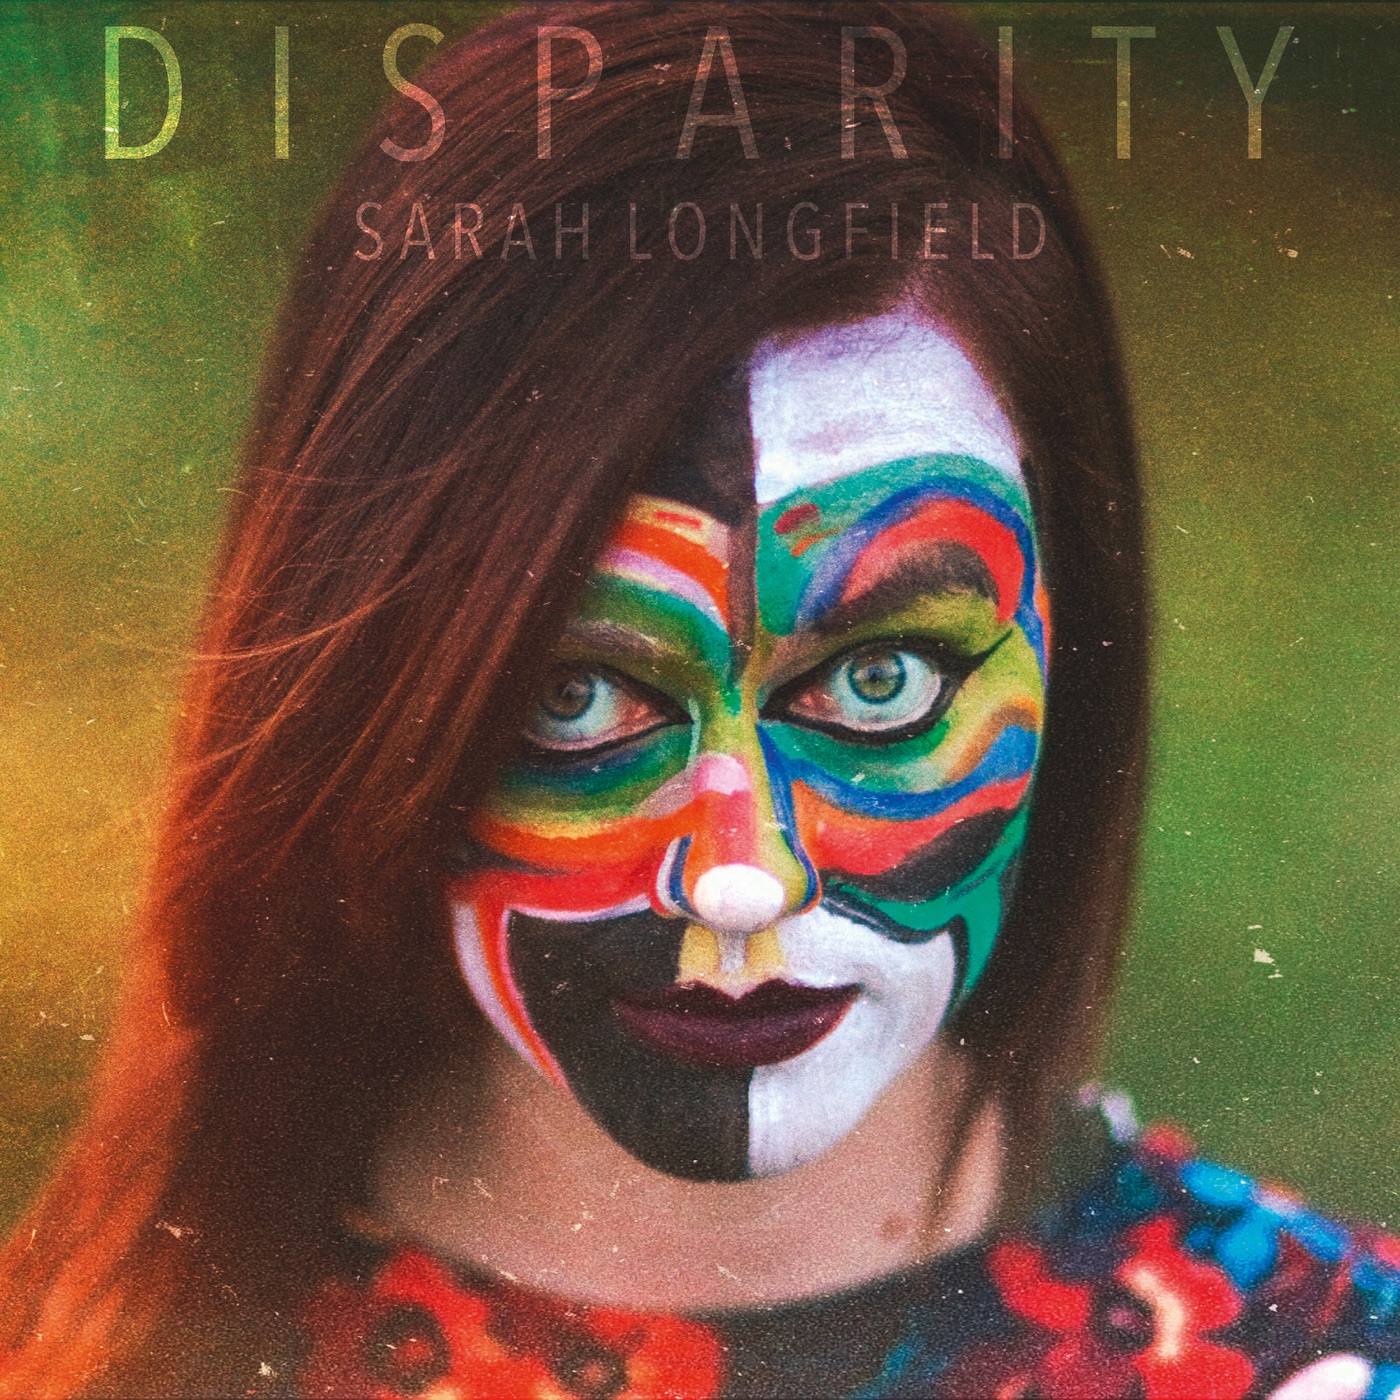 Disparity by Sarah Longfield